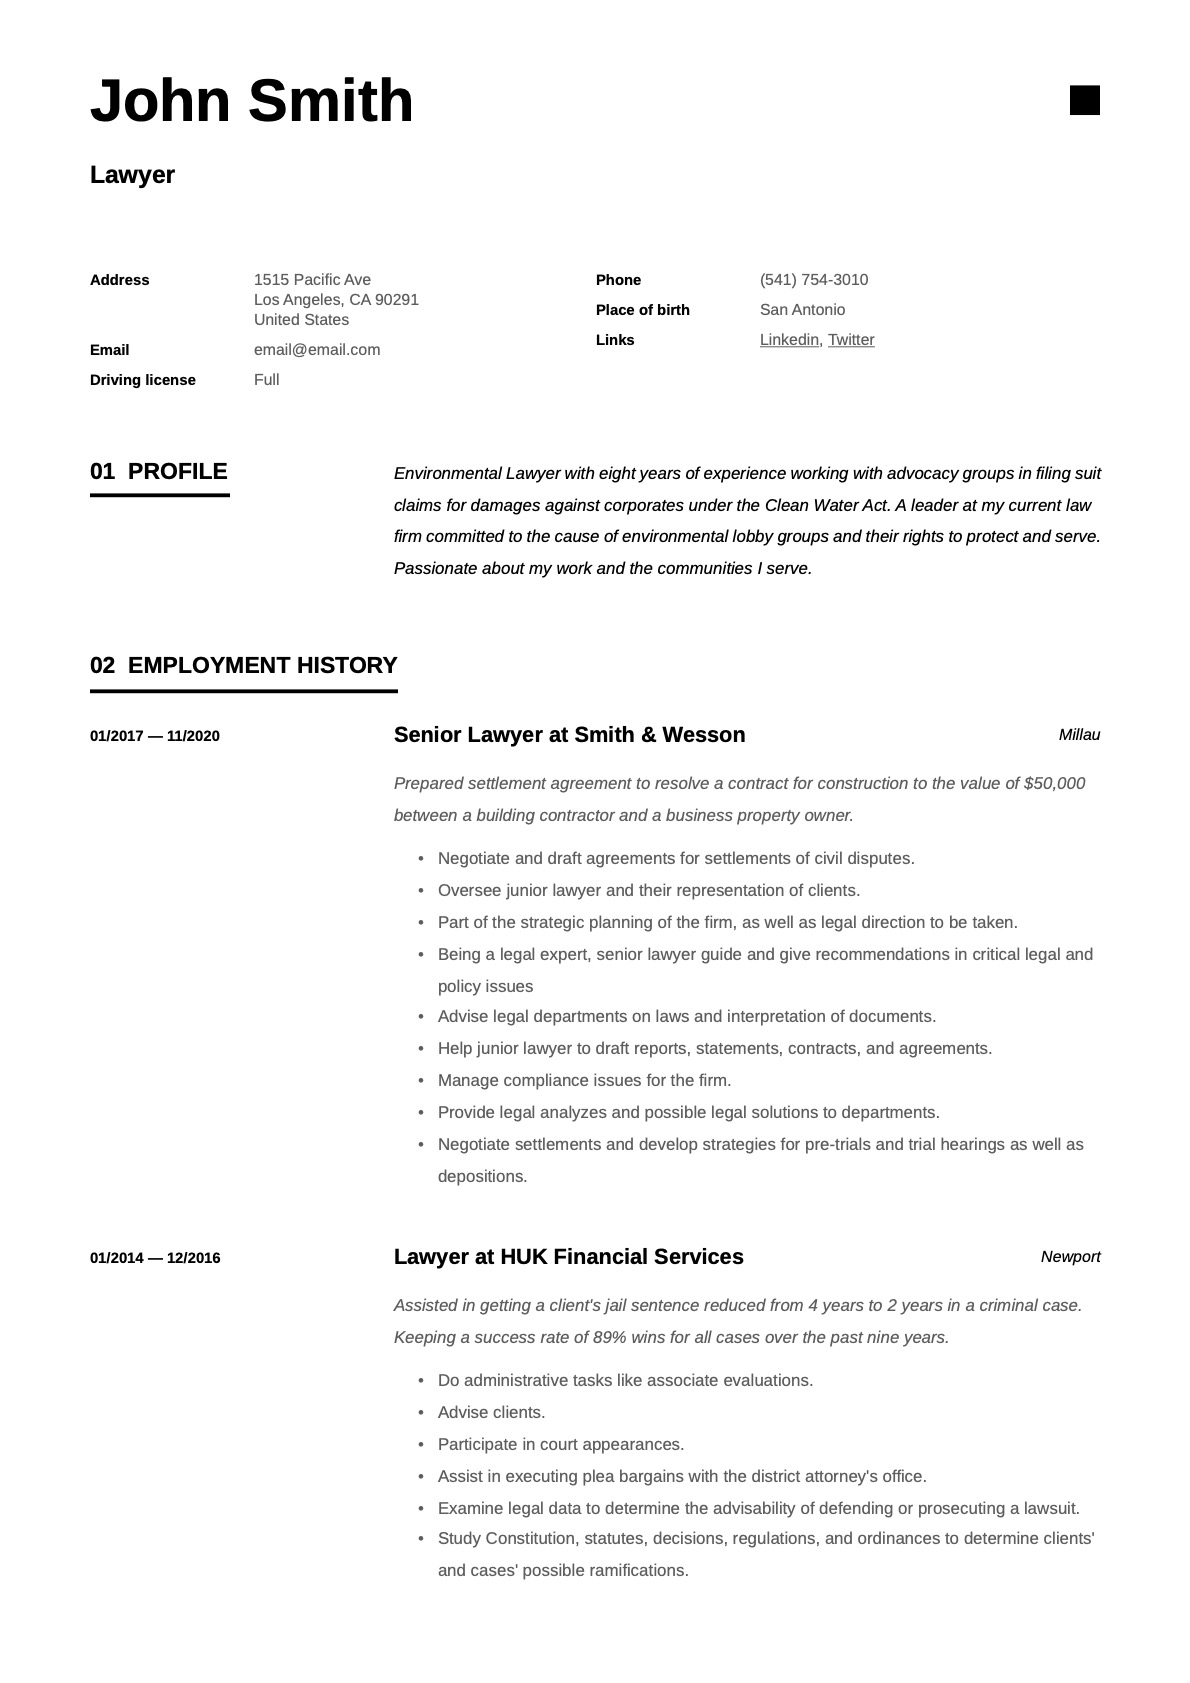 Example resume Lawyer-11